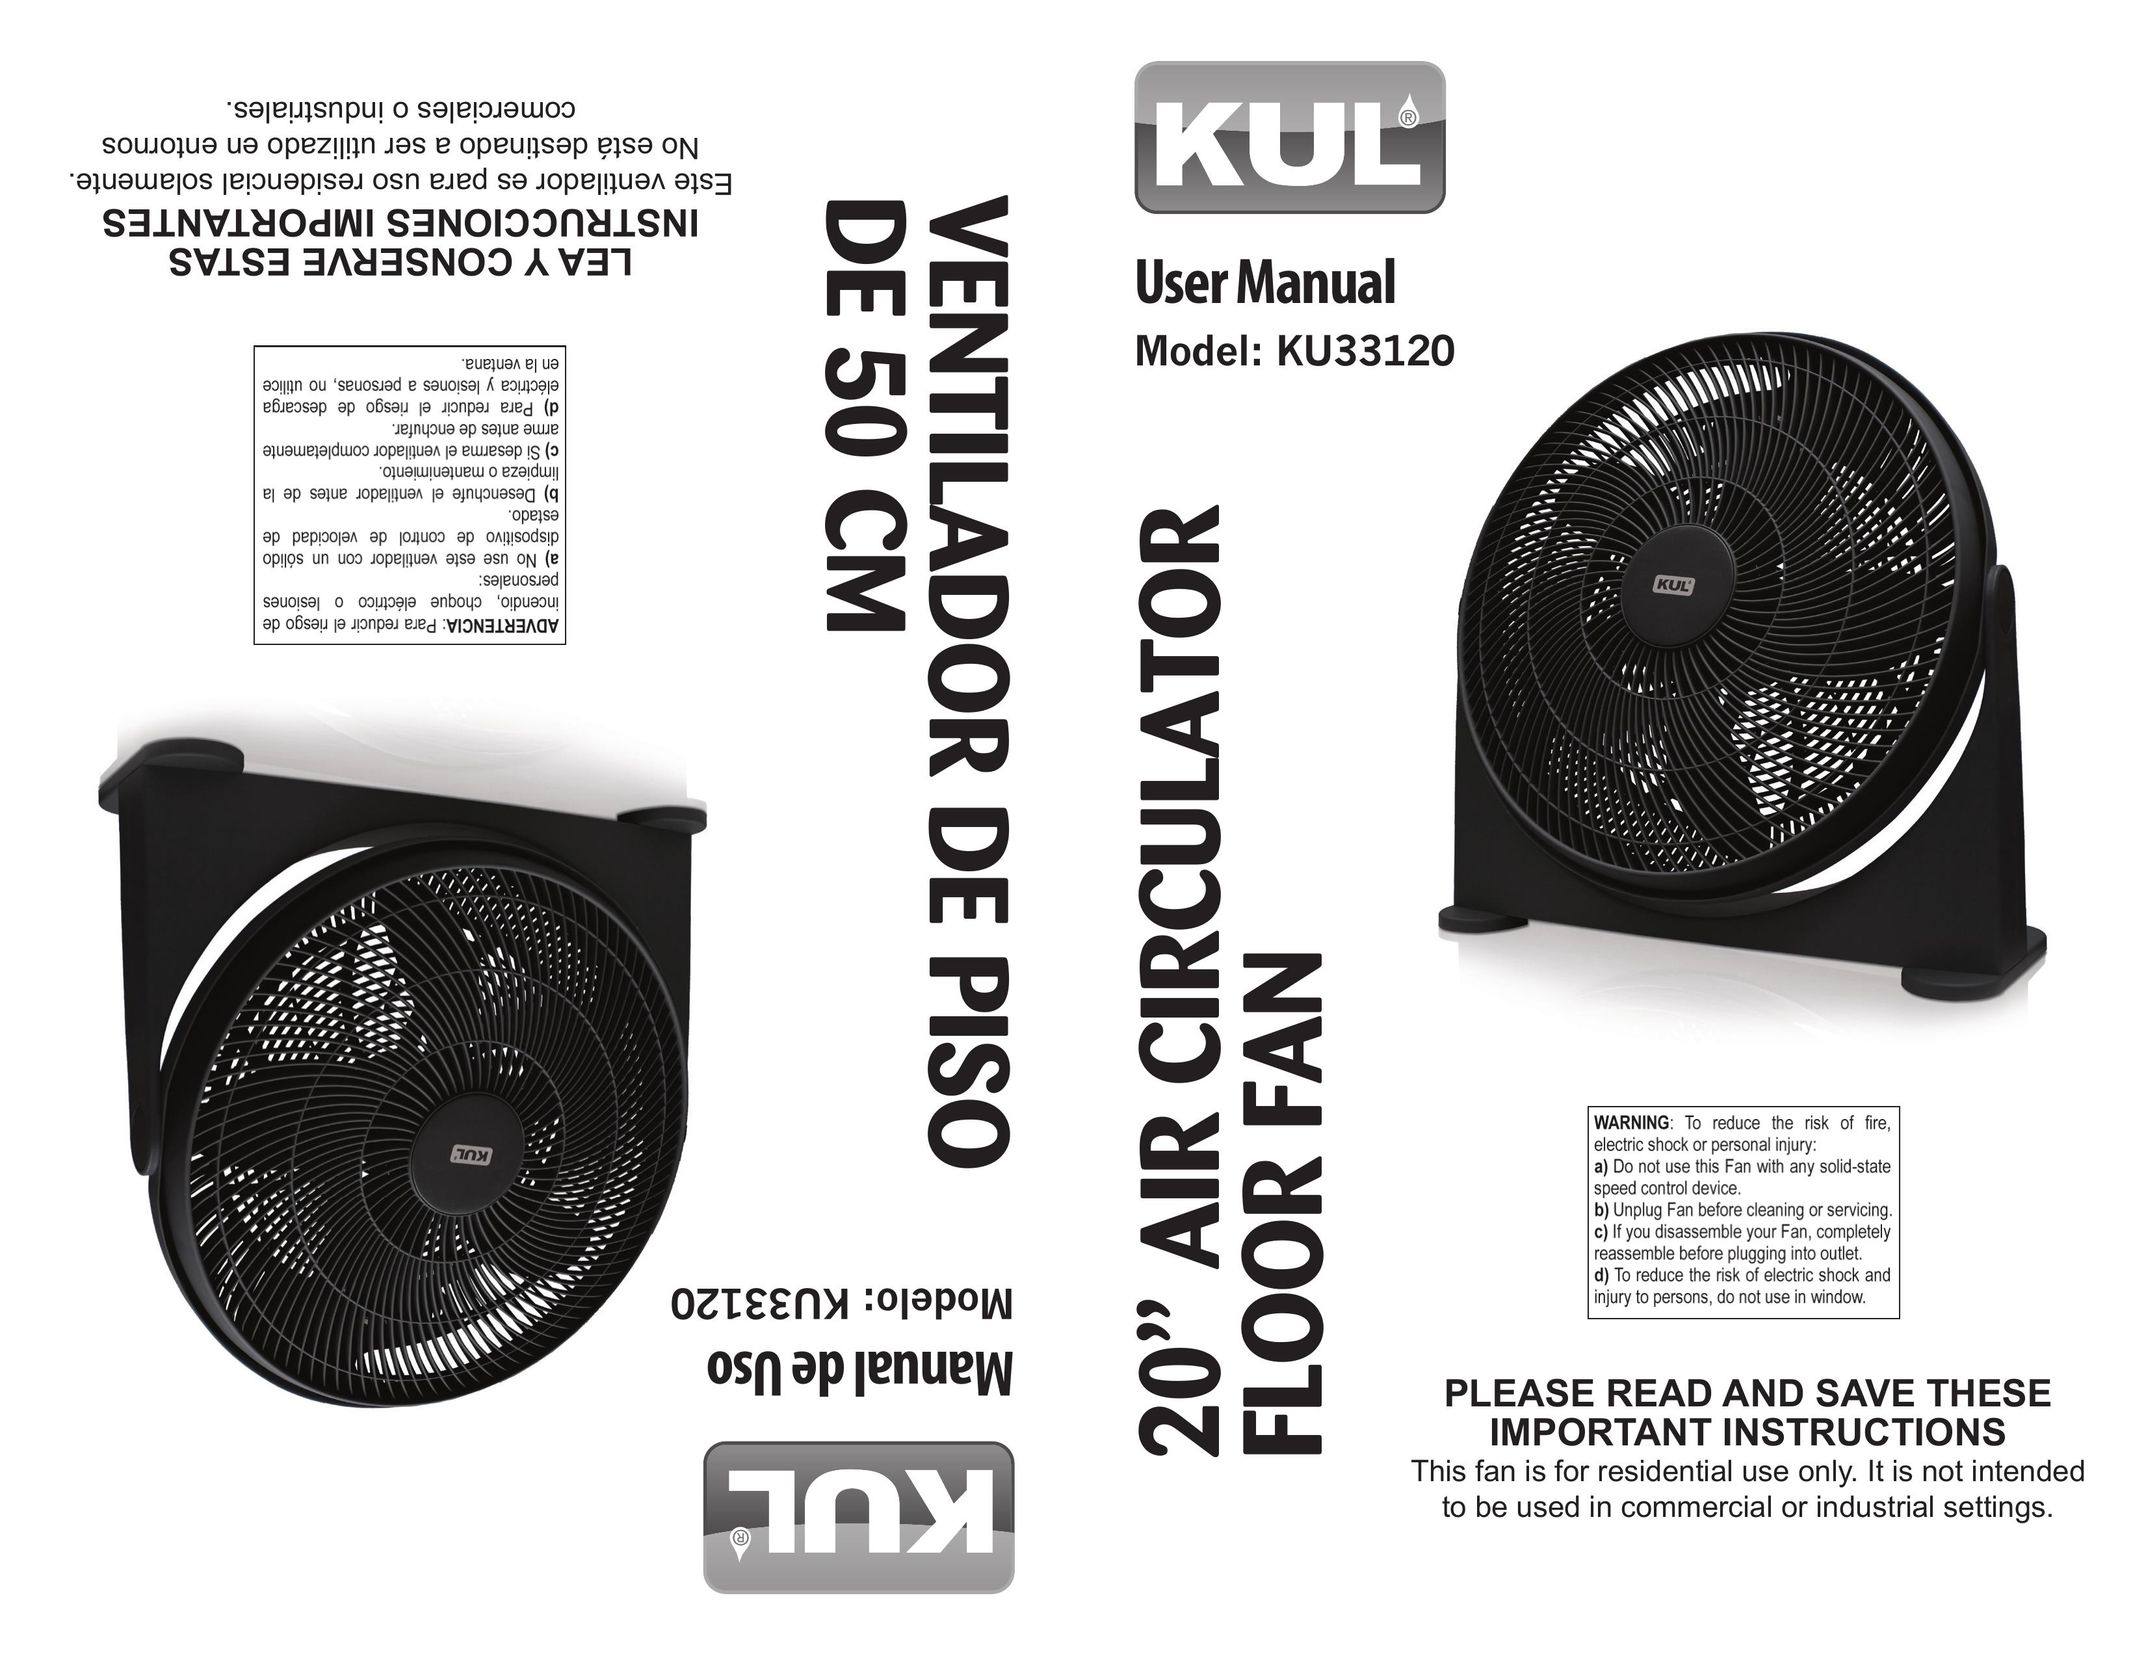 Continental Electric KU33120 Fan User Manual